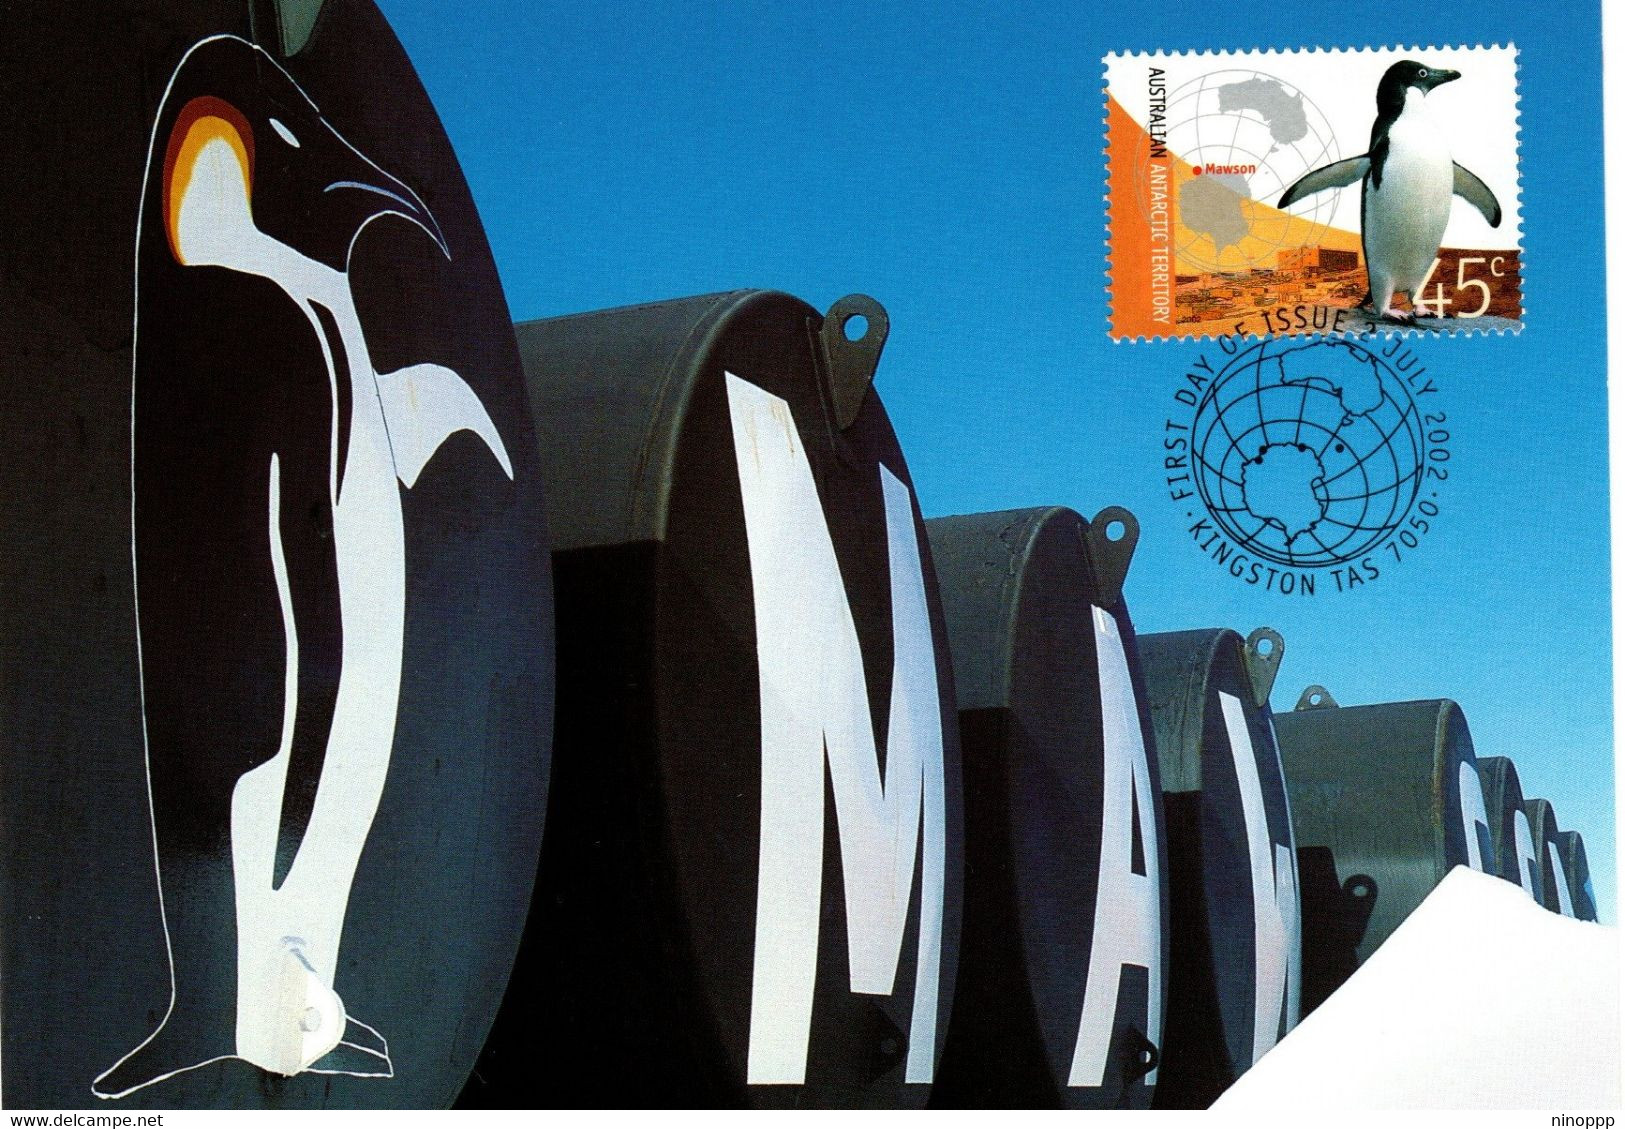 Australian Antarctic Territory 2002 Antarctic Research,Mawson Station,maximum Card - Cartoline Maximum